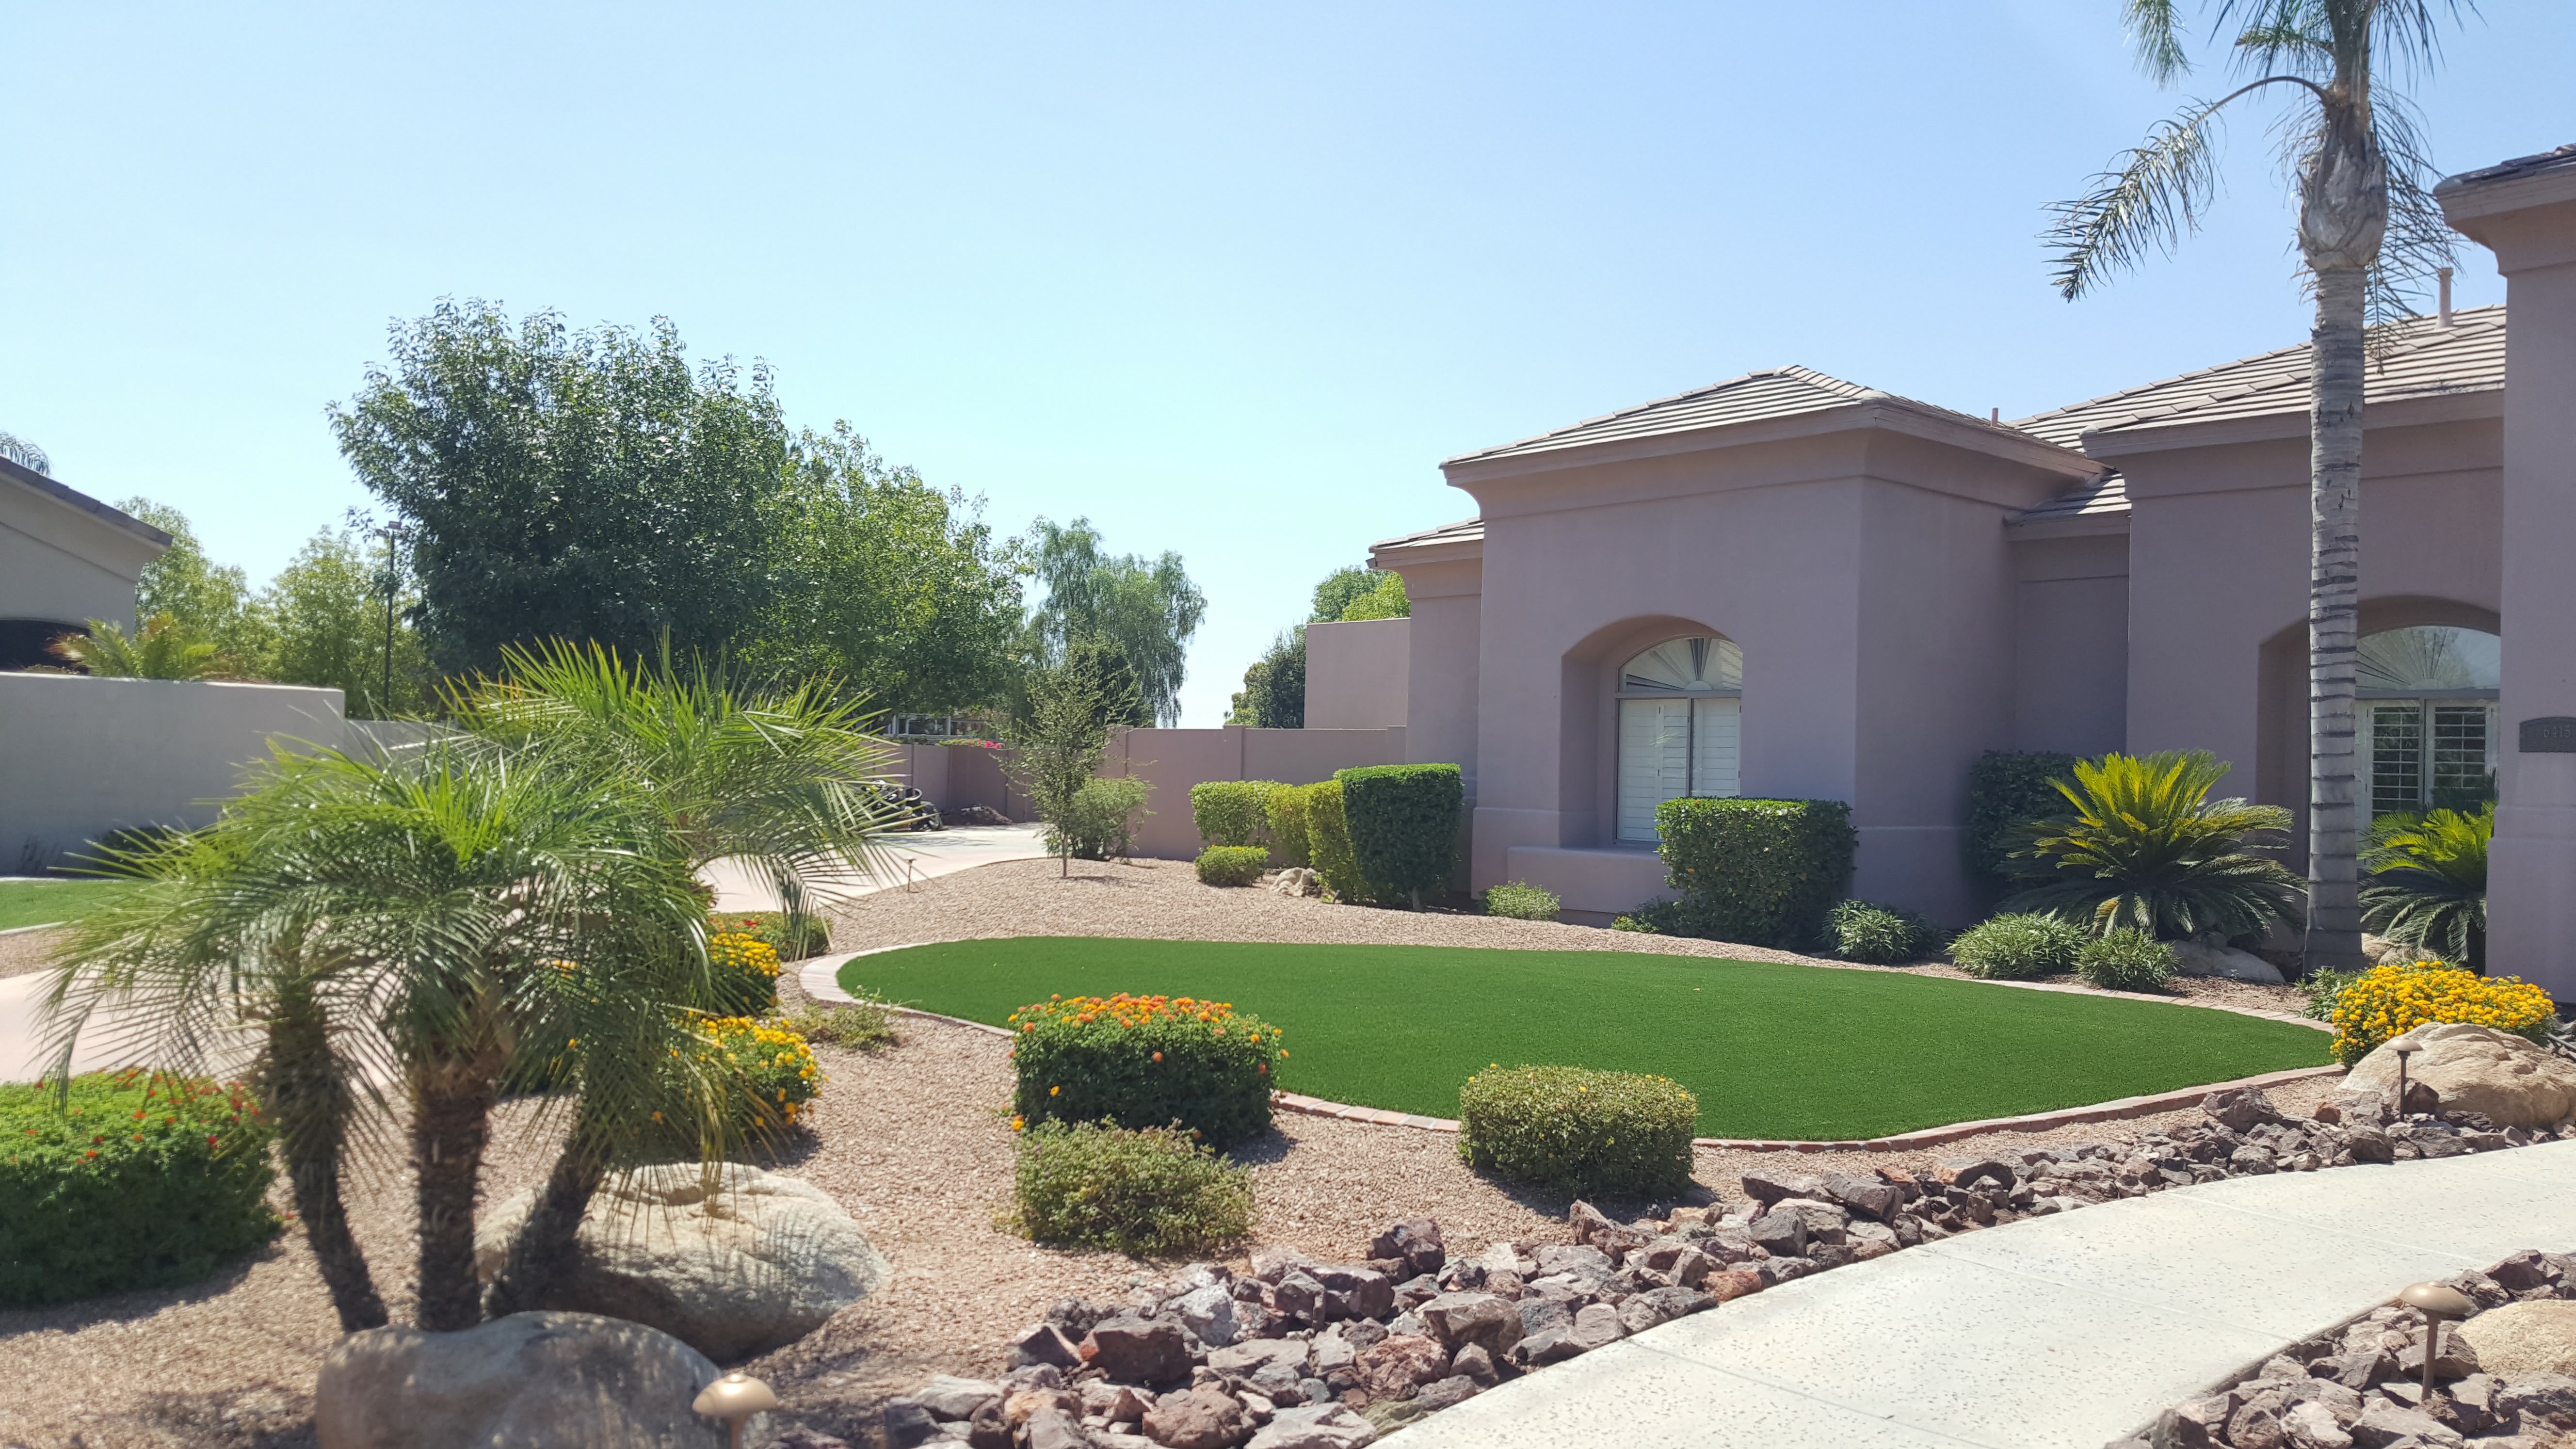 Landscaping Company in Phoenix Arizona